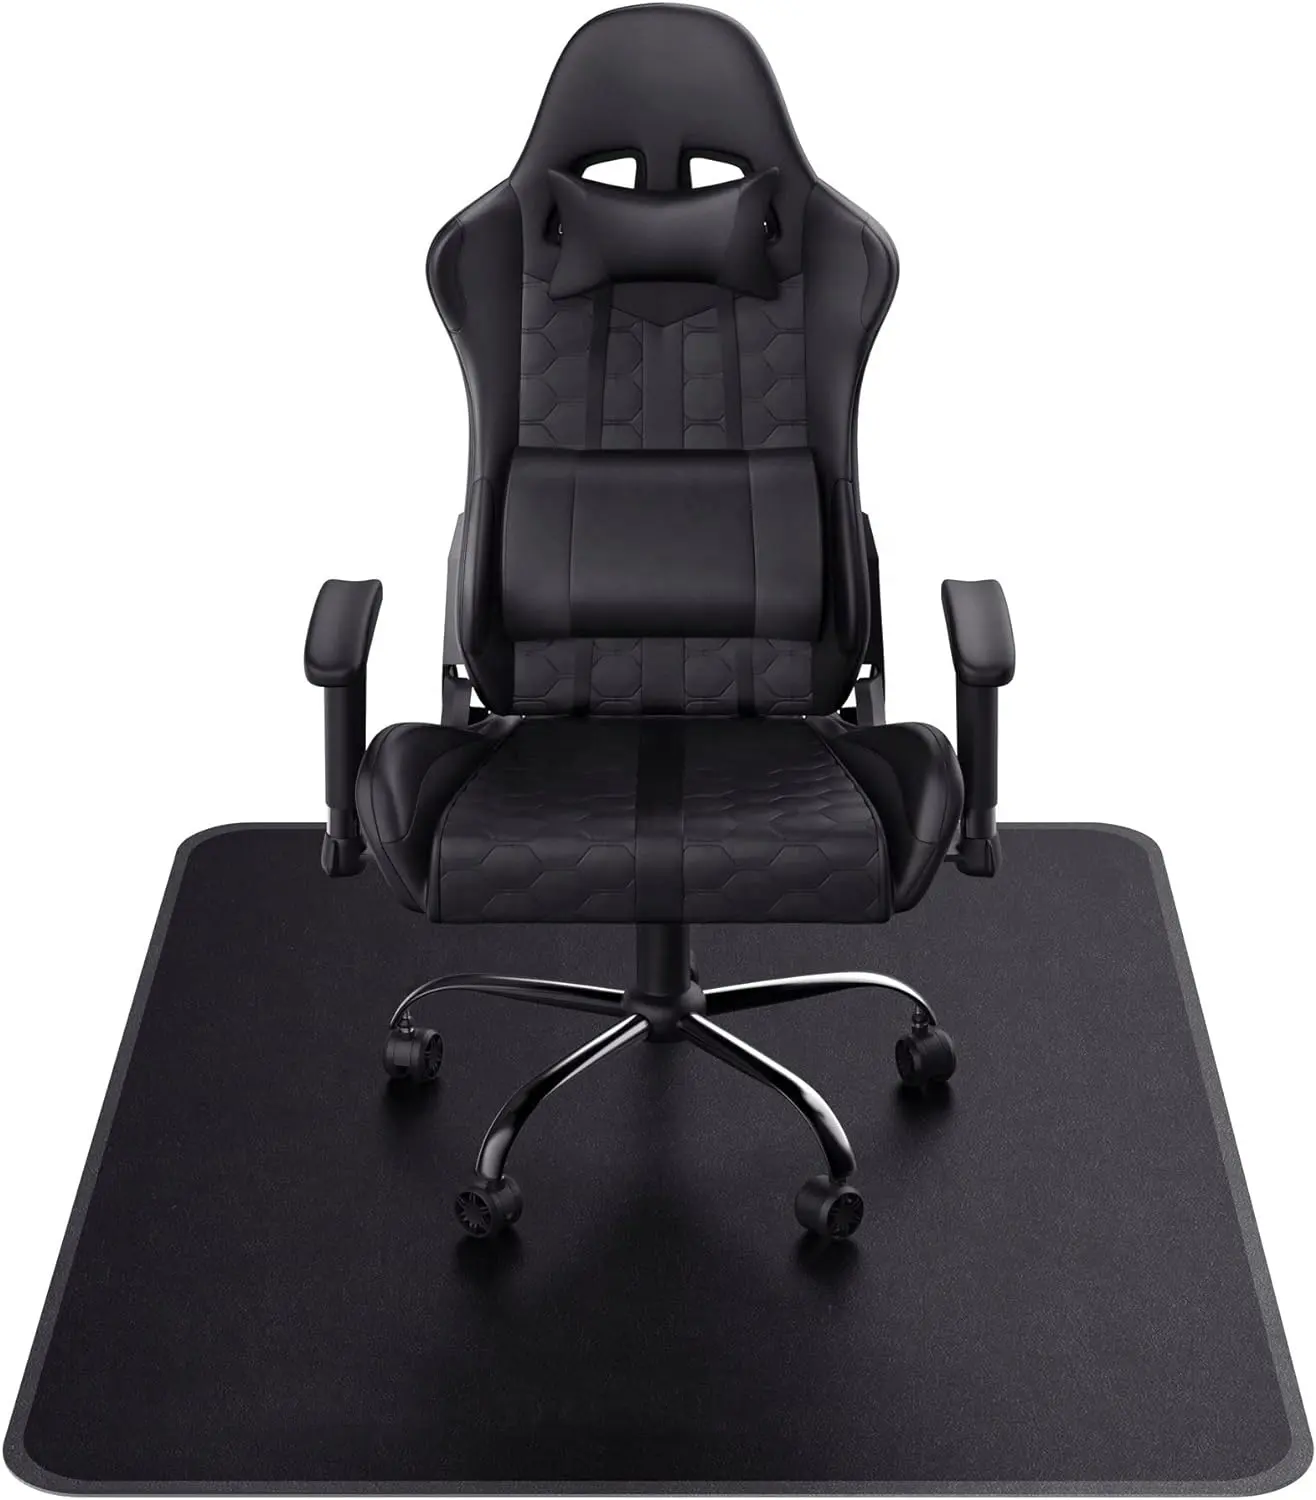 JL barato Bélgica negro Austria robusto duradero juego zona giratoria balancín 2d diamante cuero carbono PC silla de oficina para todos los jugadores